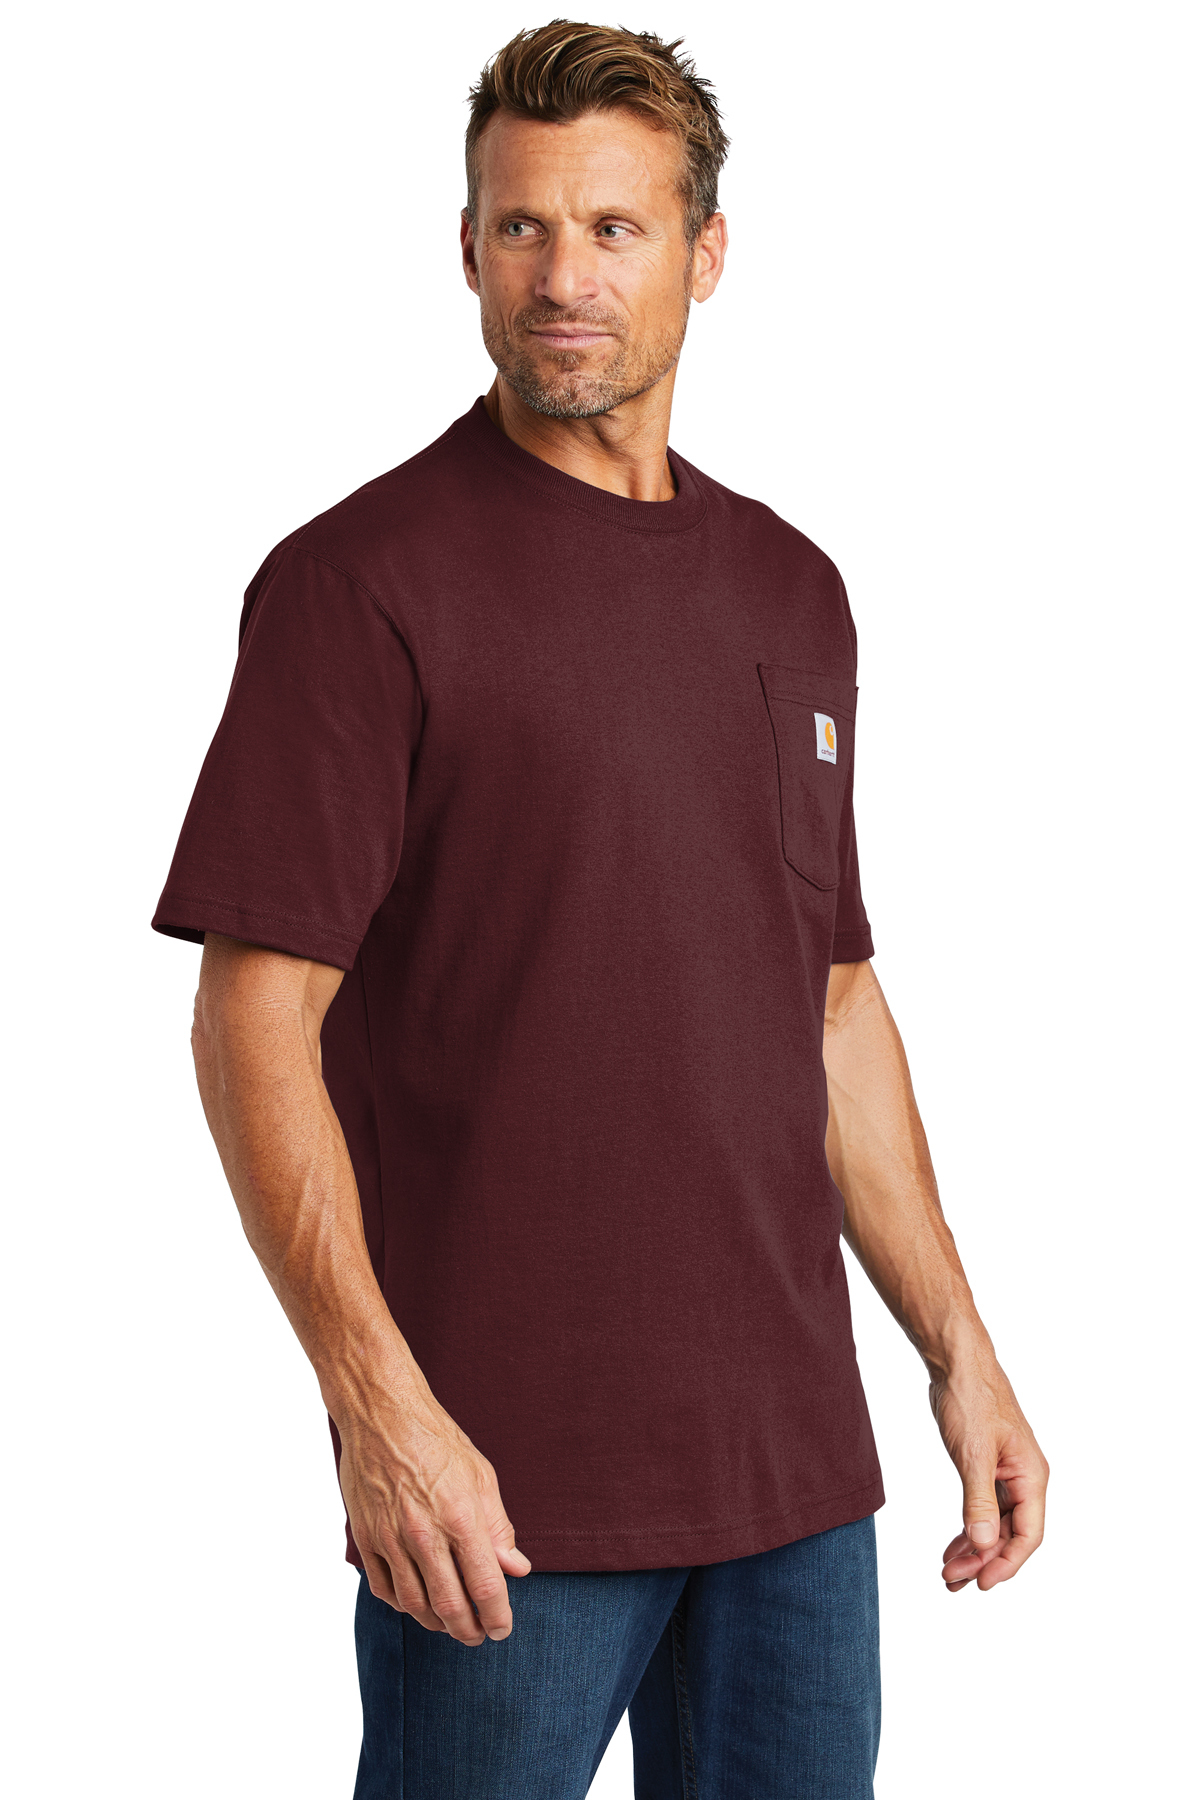 Carhartt Workwear Pocket Short Sleeve Product T-Shirt | | SanMar